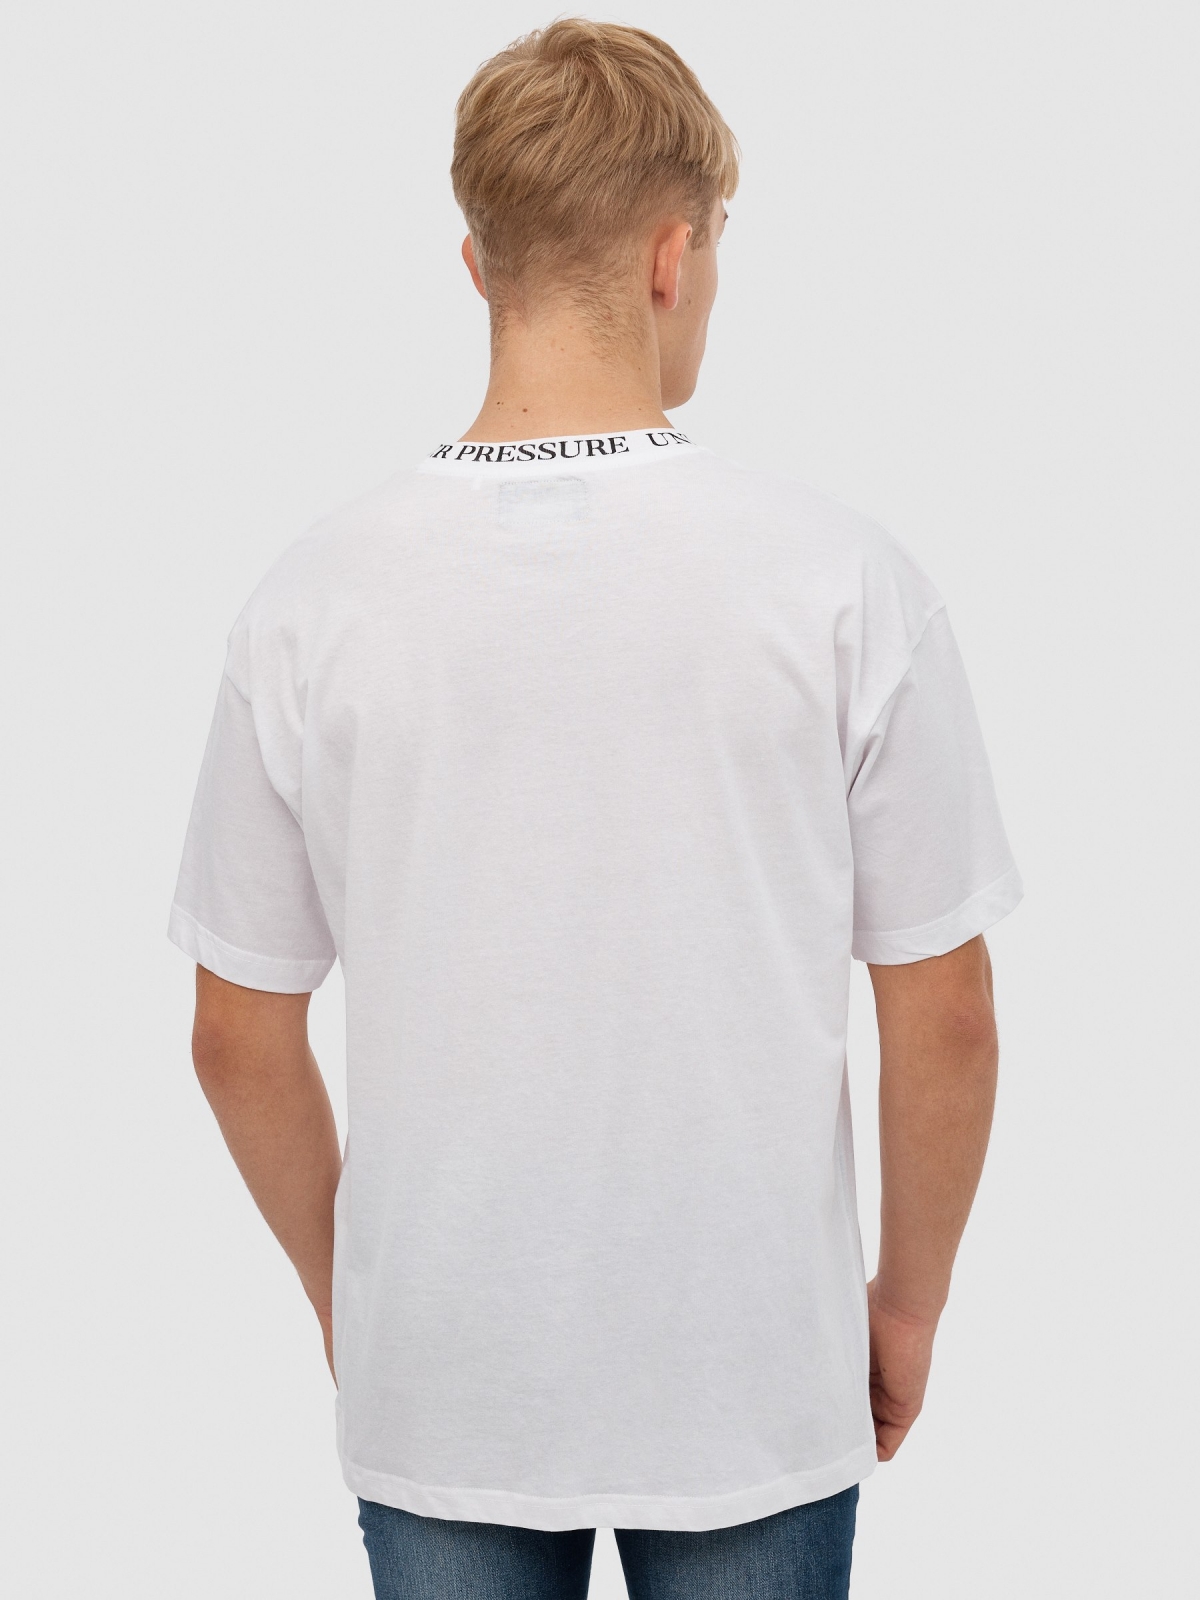 T-shirt "Under pressure" branco vista meia traseira